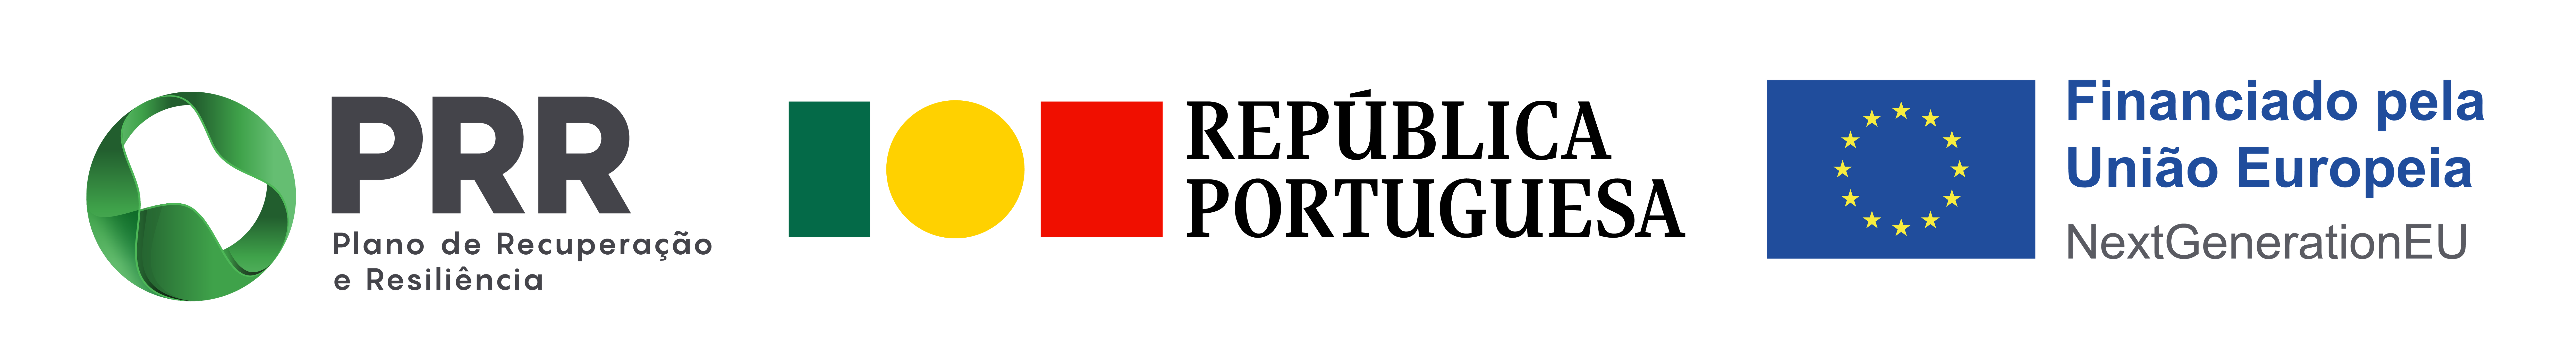 barra logotipos PRR - Recuperar Portugal